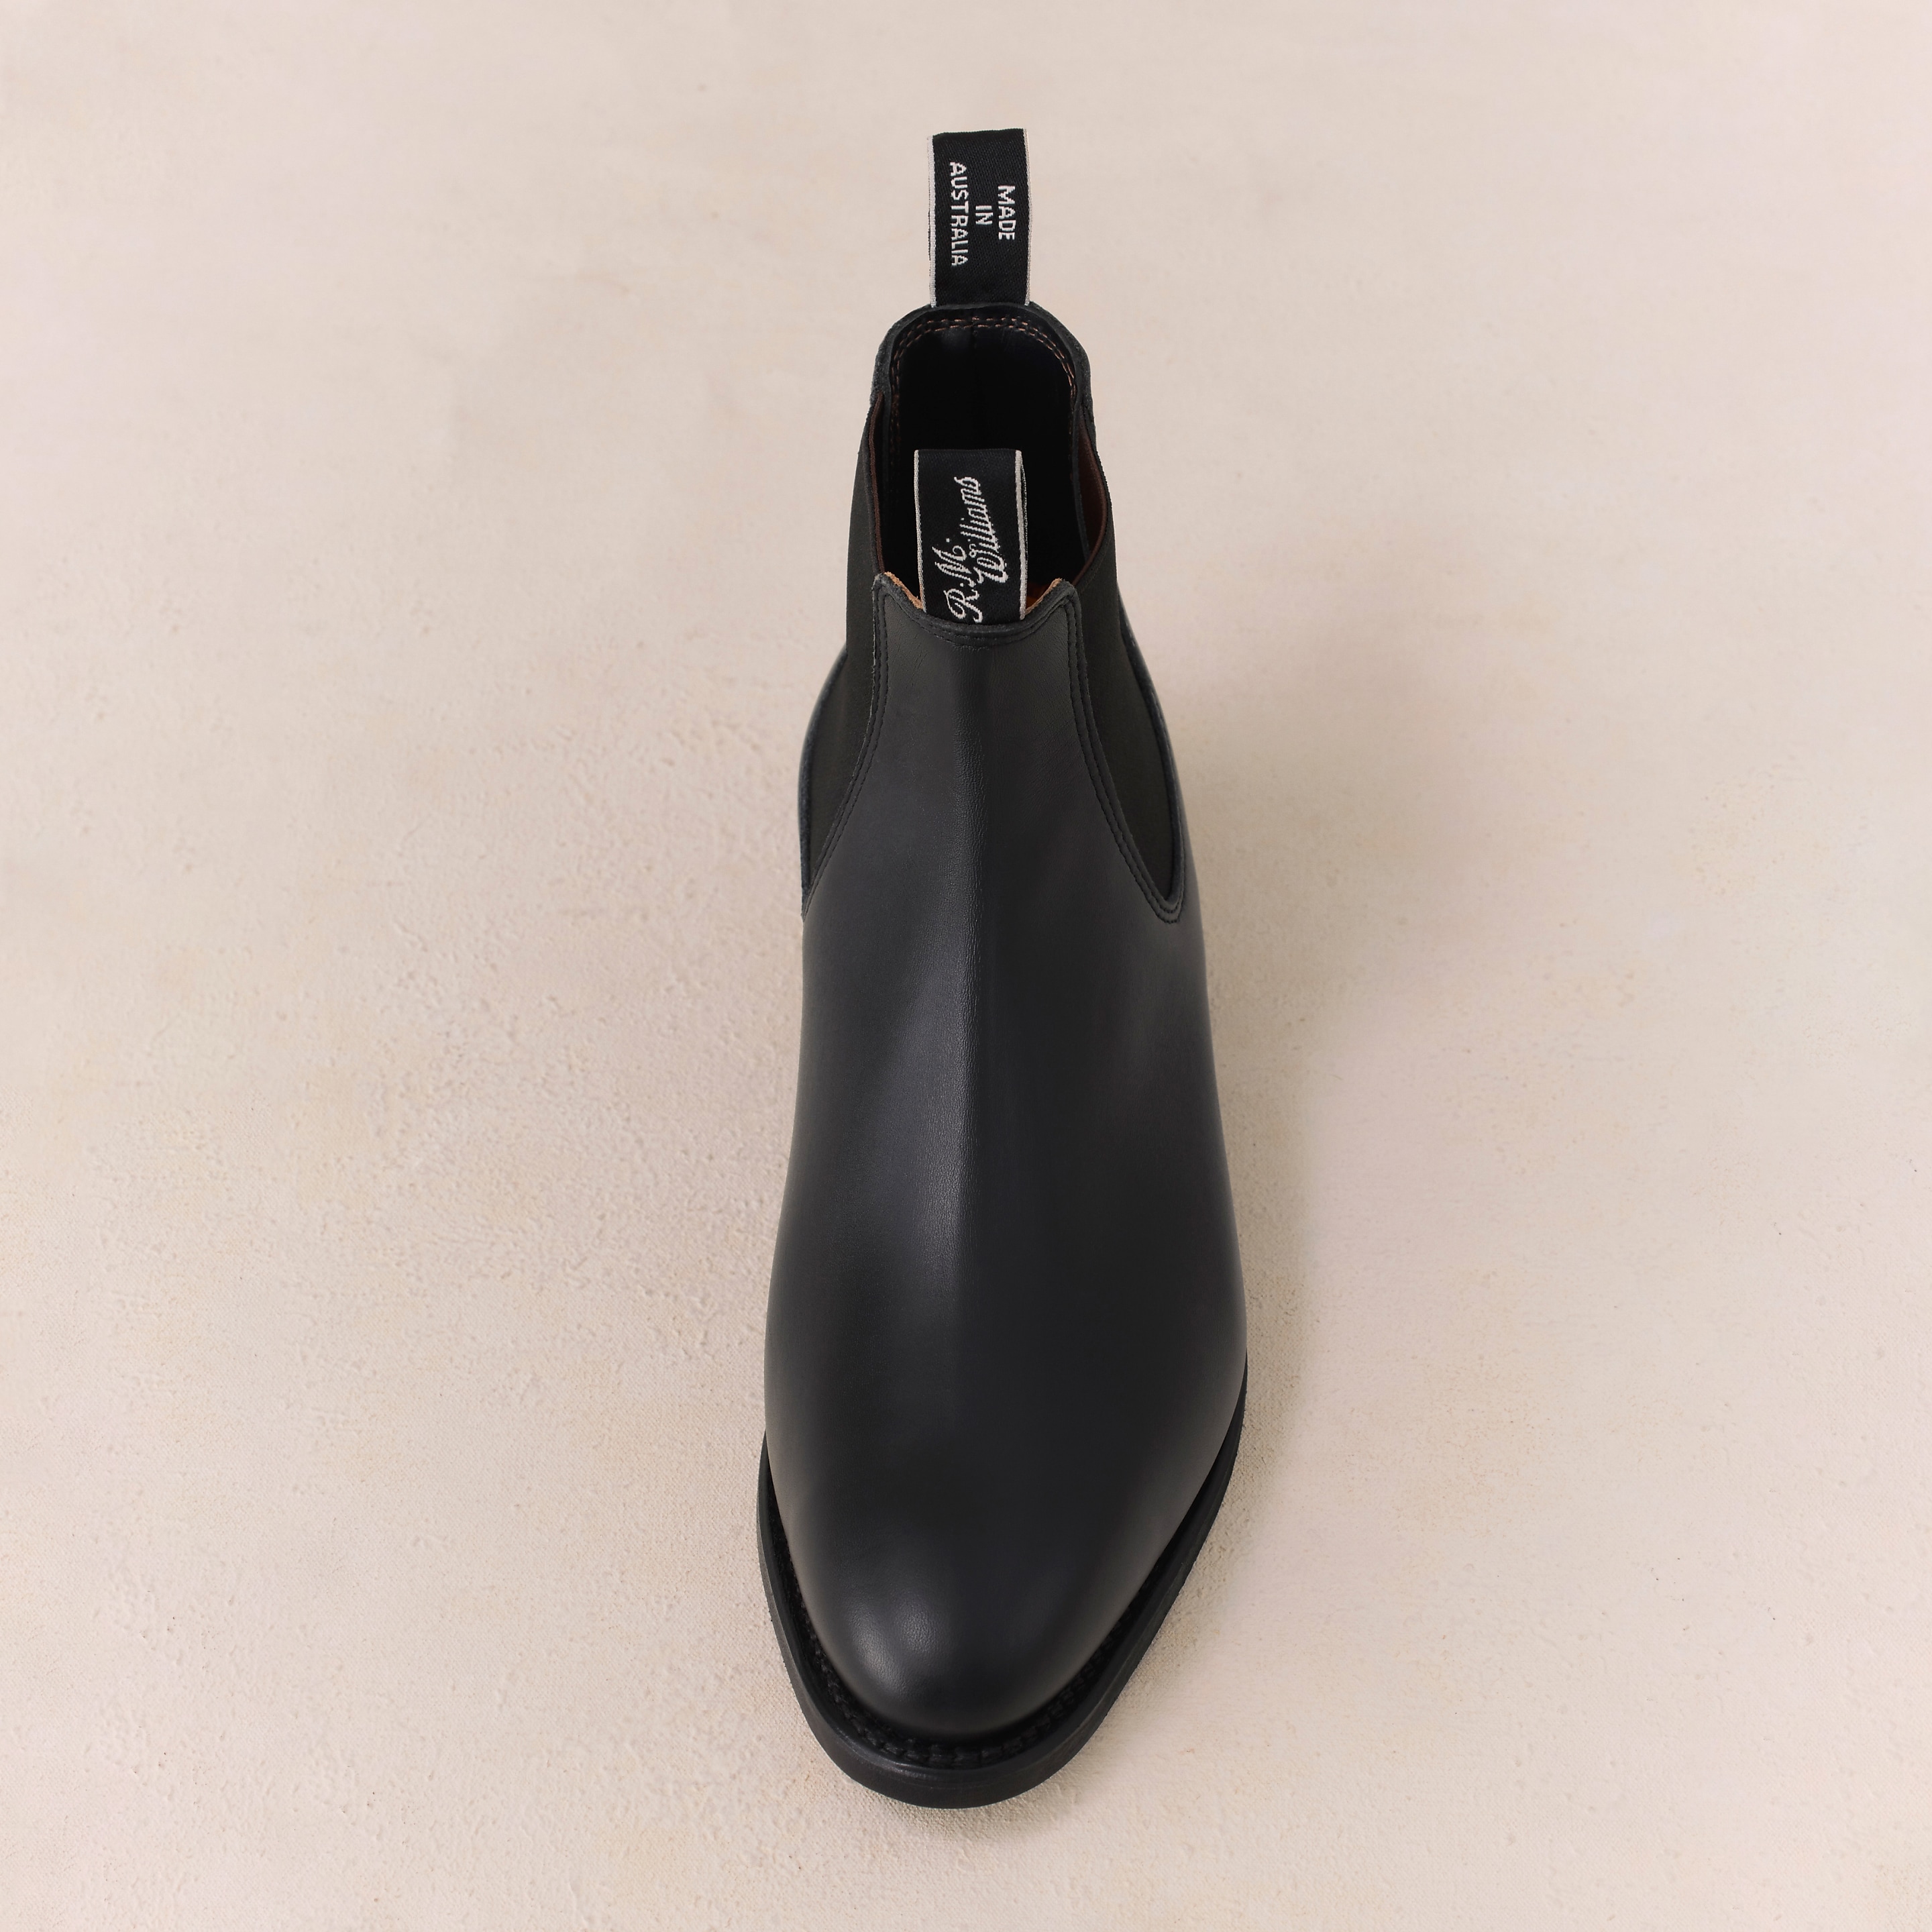 RM WILLIAMS Macquarie Chelsea Suede Leather Boots Size 5 G UK/AU, 6 US, 38 EU